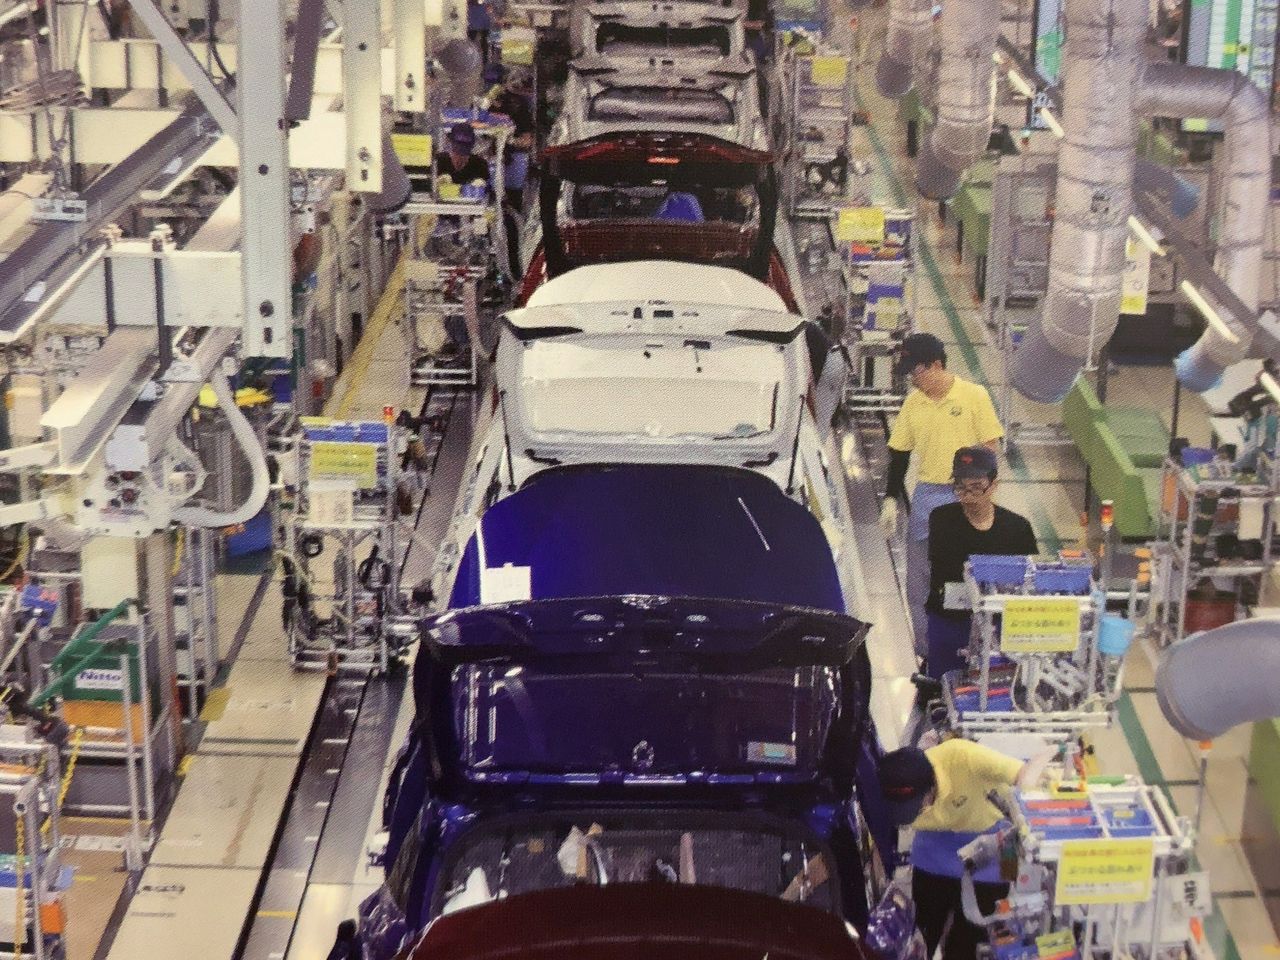 Toyota Kaikan Factory Tour to See Car Manufacturing!